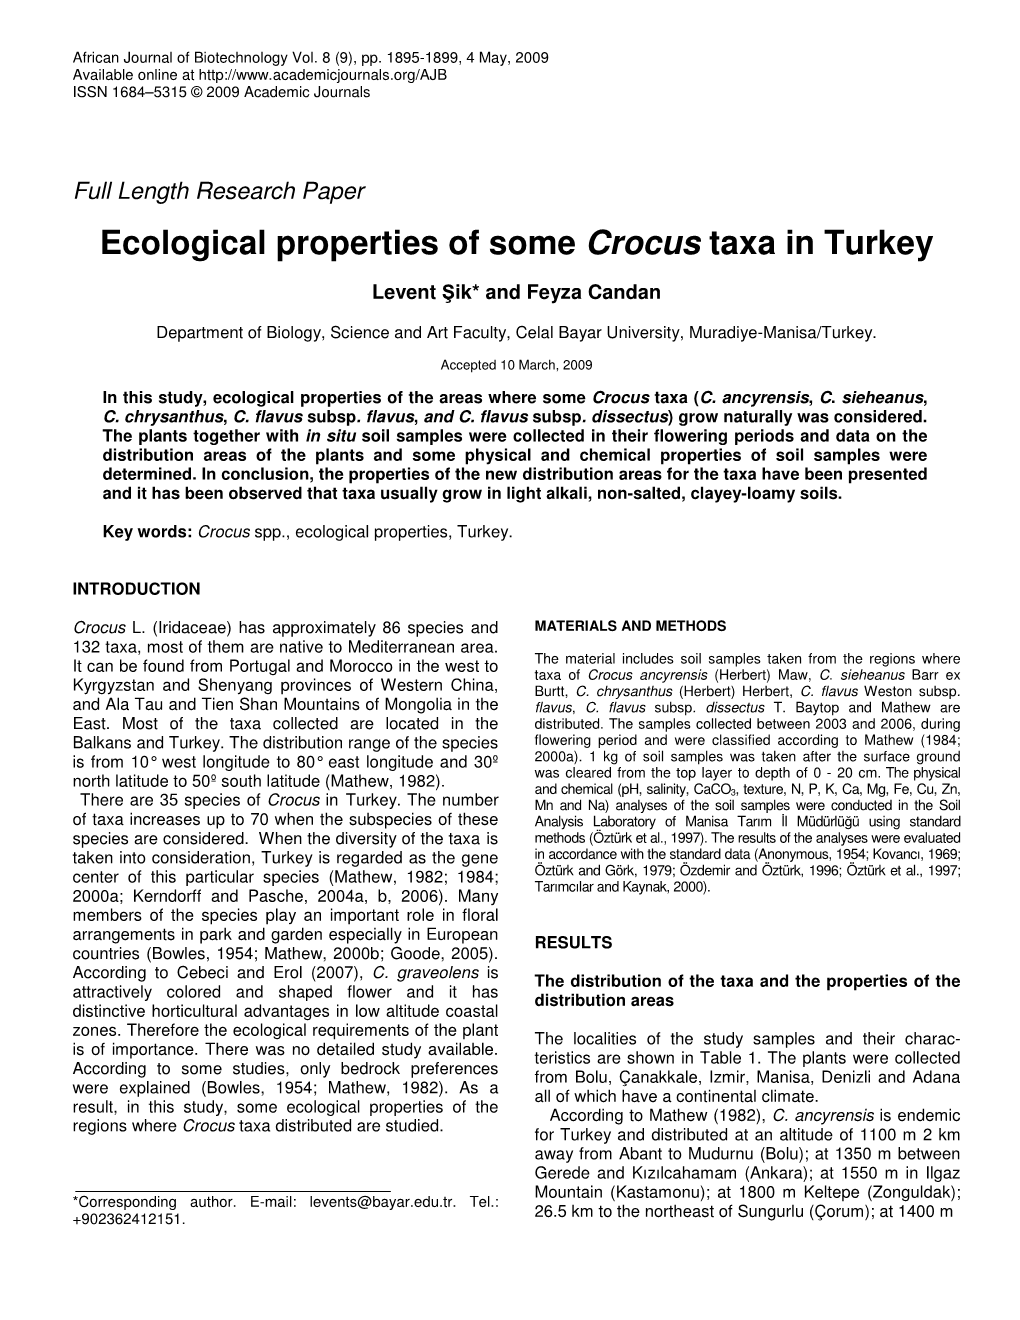 Ecological Properties of Some Crocus Taxa in Turkey